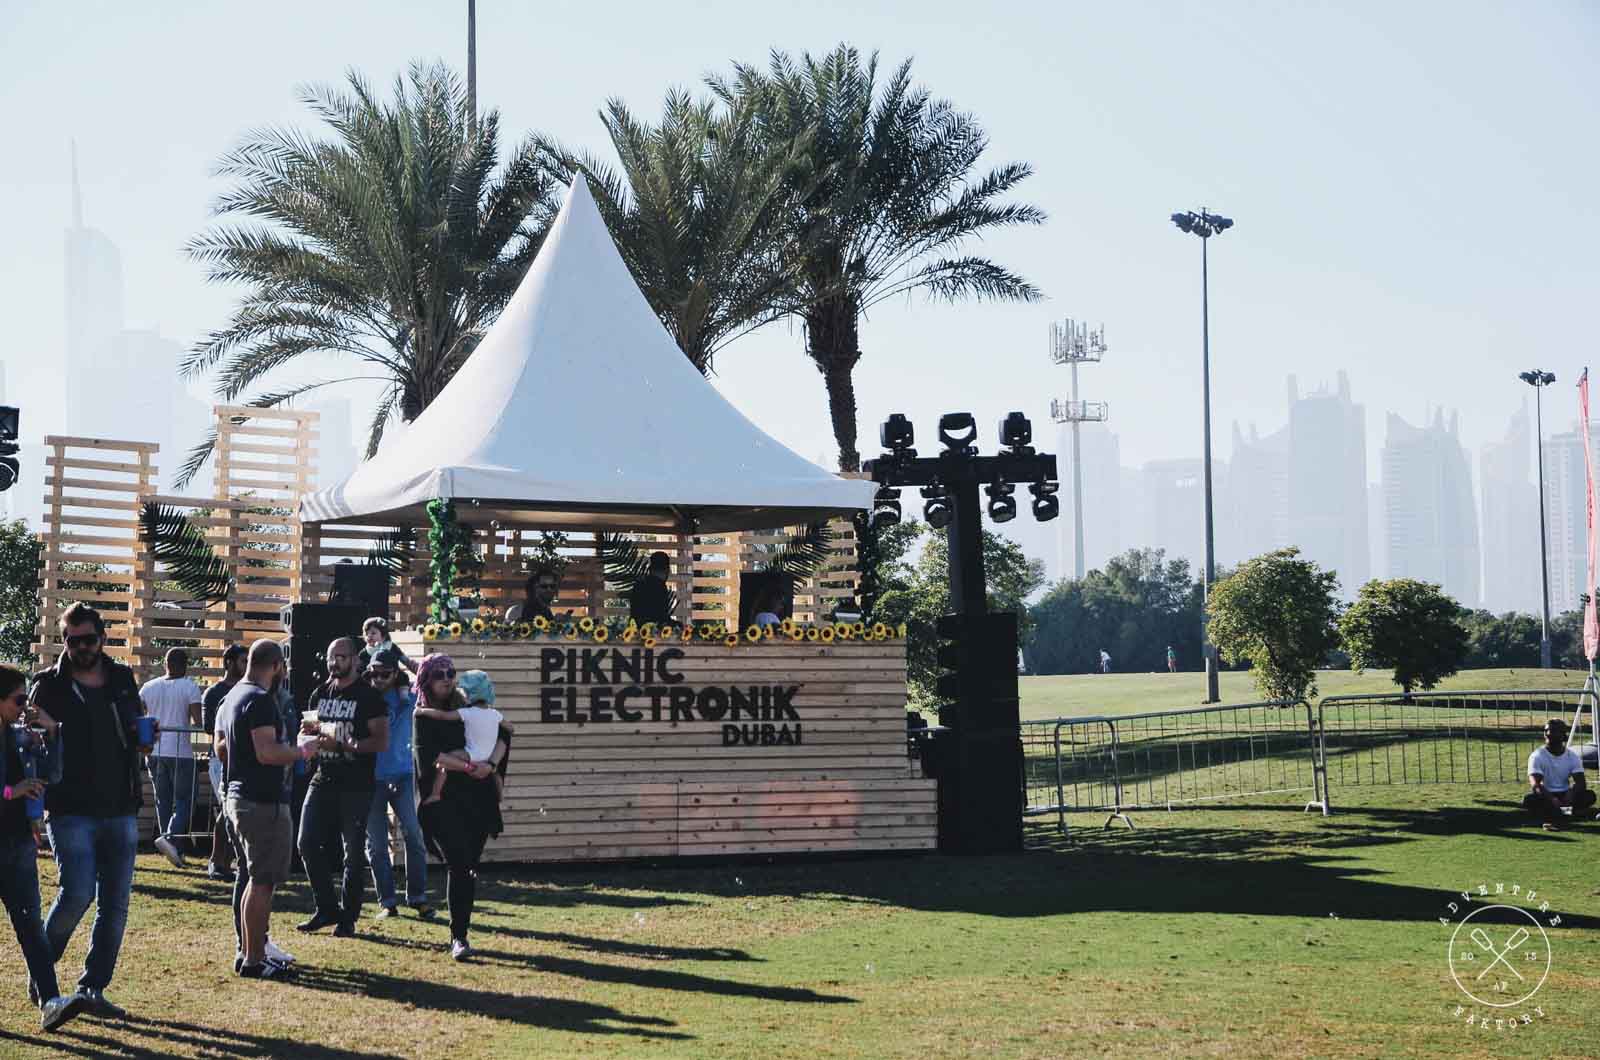 Piknic Elektronic Dubai